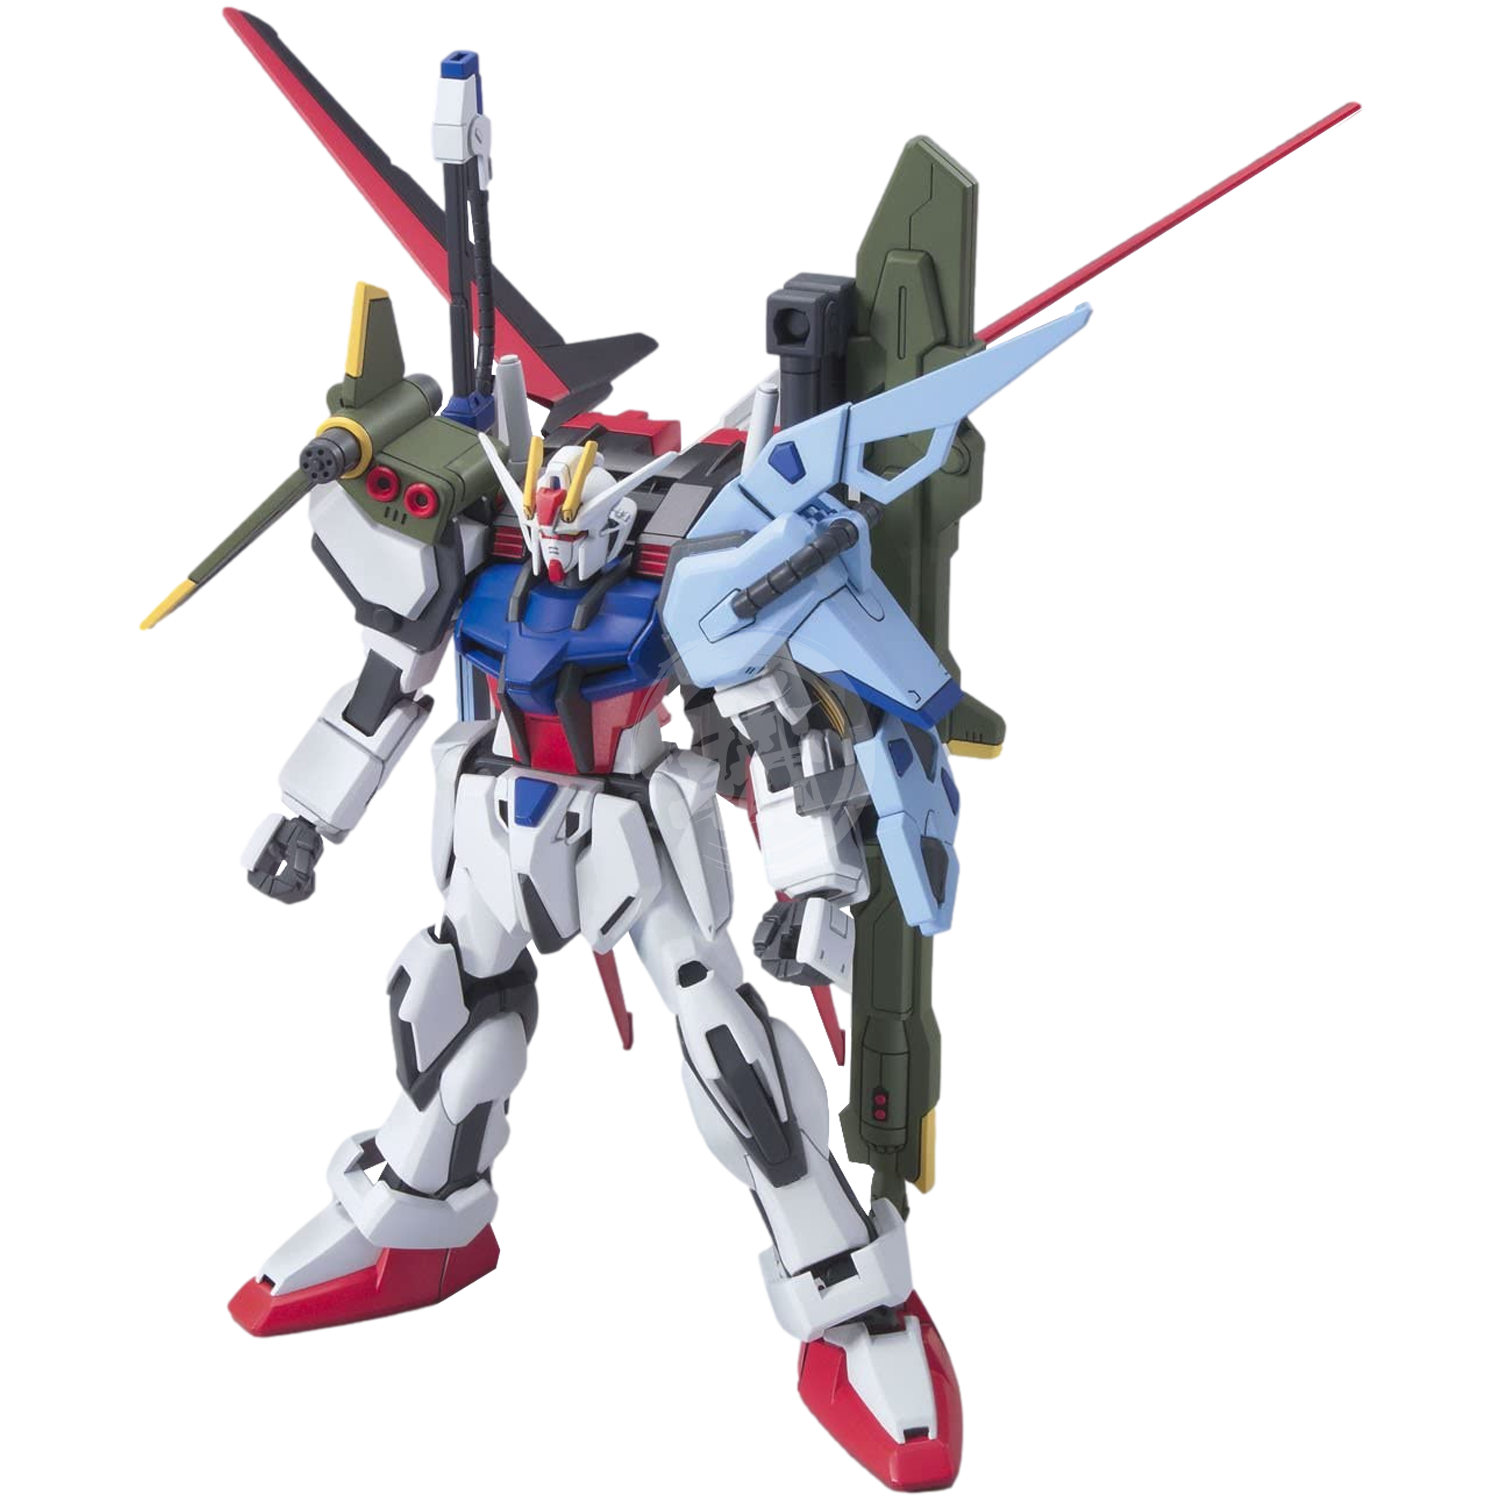 HG Perfect Strike Gundam - ShokuninGunpla